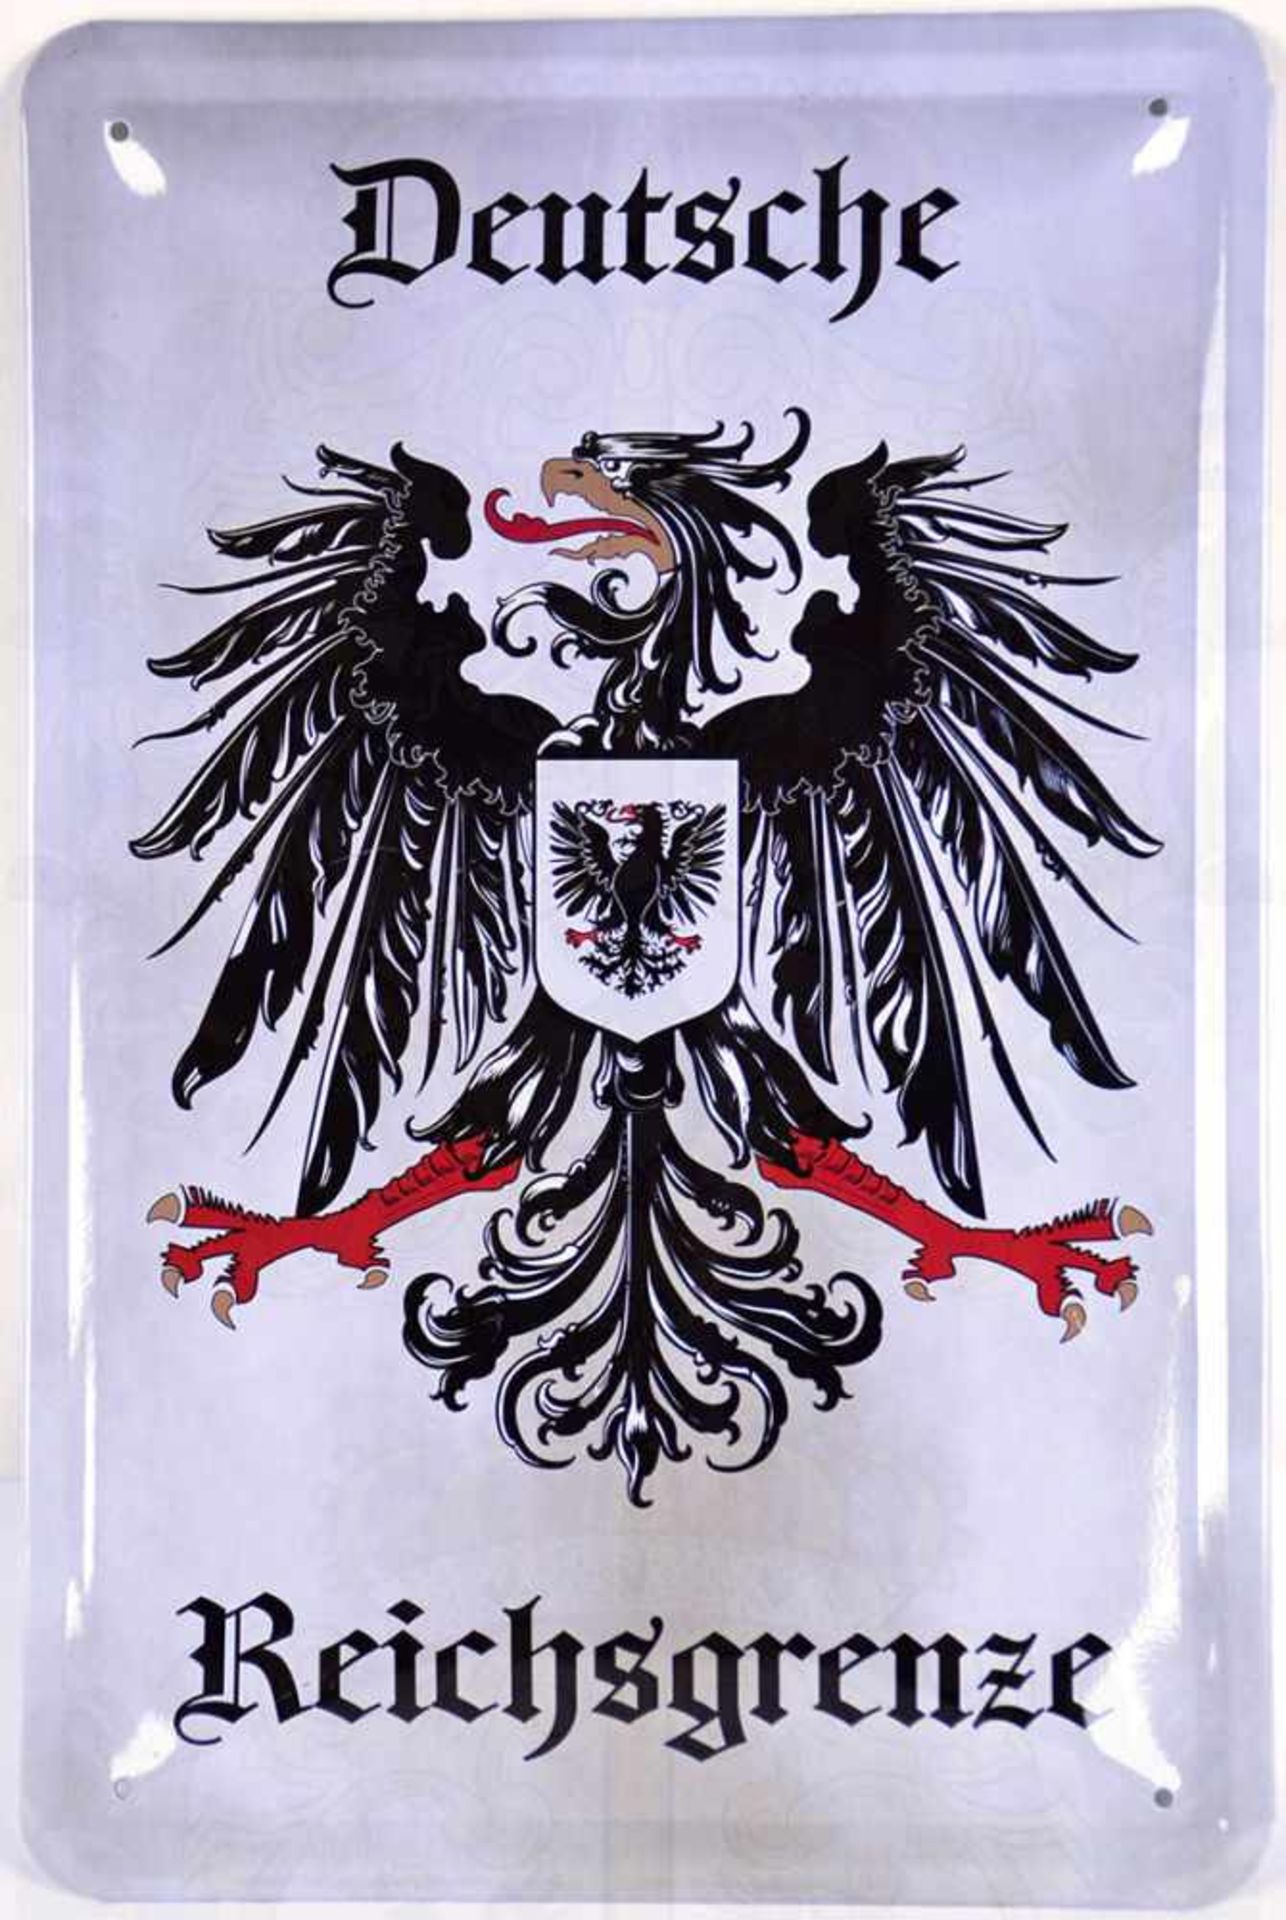 SCHILD „DEUTSCHE REICHSGRENZE“, Eisenblech, gedrucktes Wappen u. Beschriftung, 4 Befestigungslöcher,